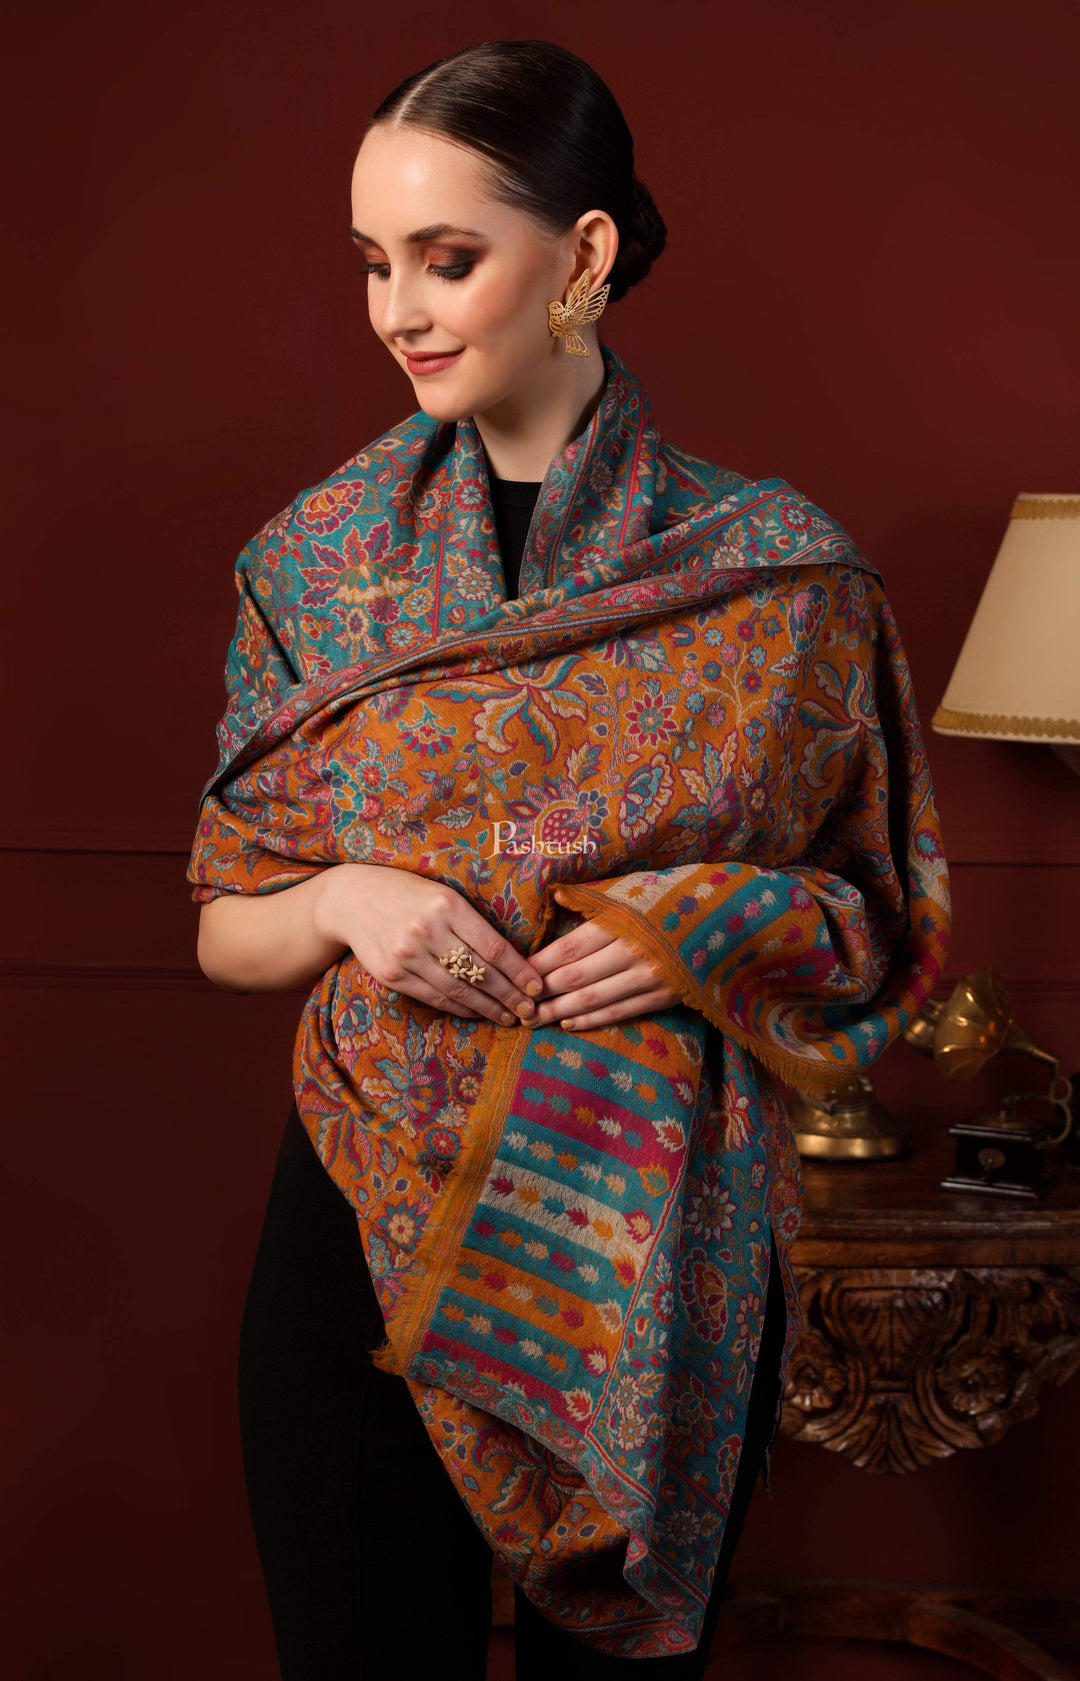 Pashtush India 100x200 Pashtush Womens Pure Wool Ethnic Shawl, Reversible Weave, With Woolmark Certification, Mustard and Blue